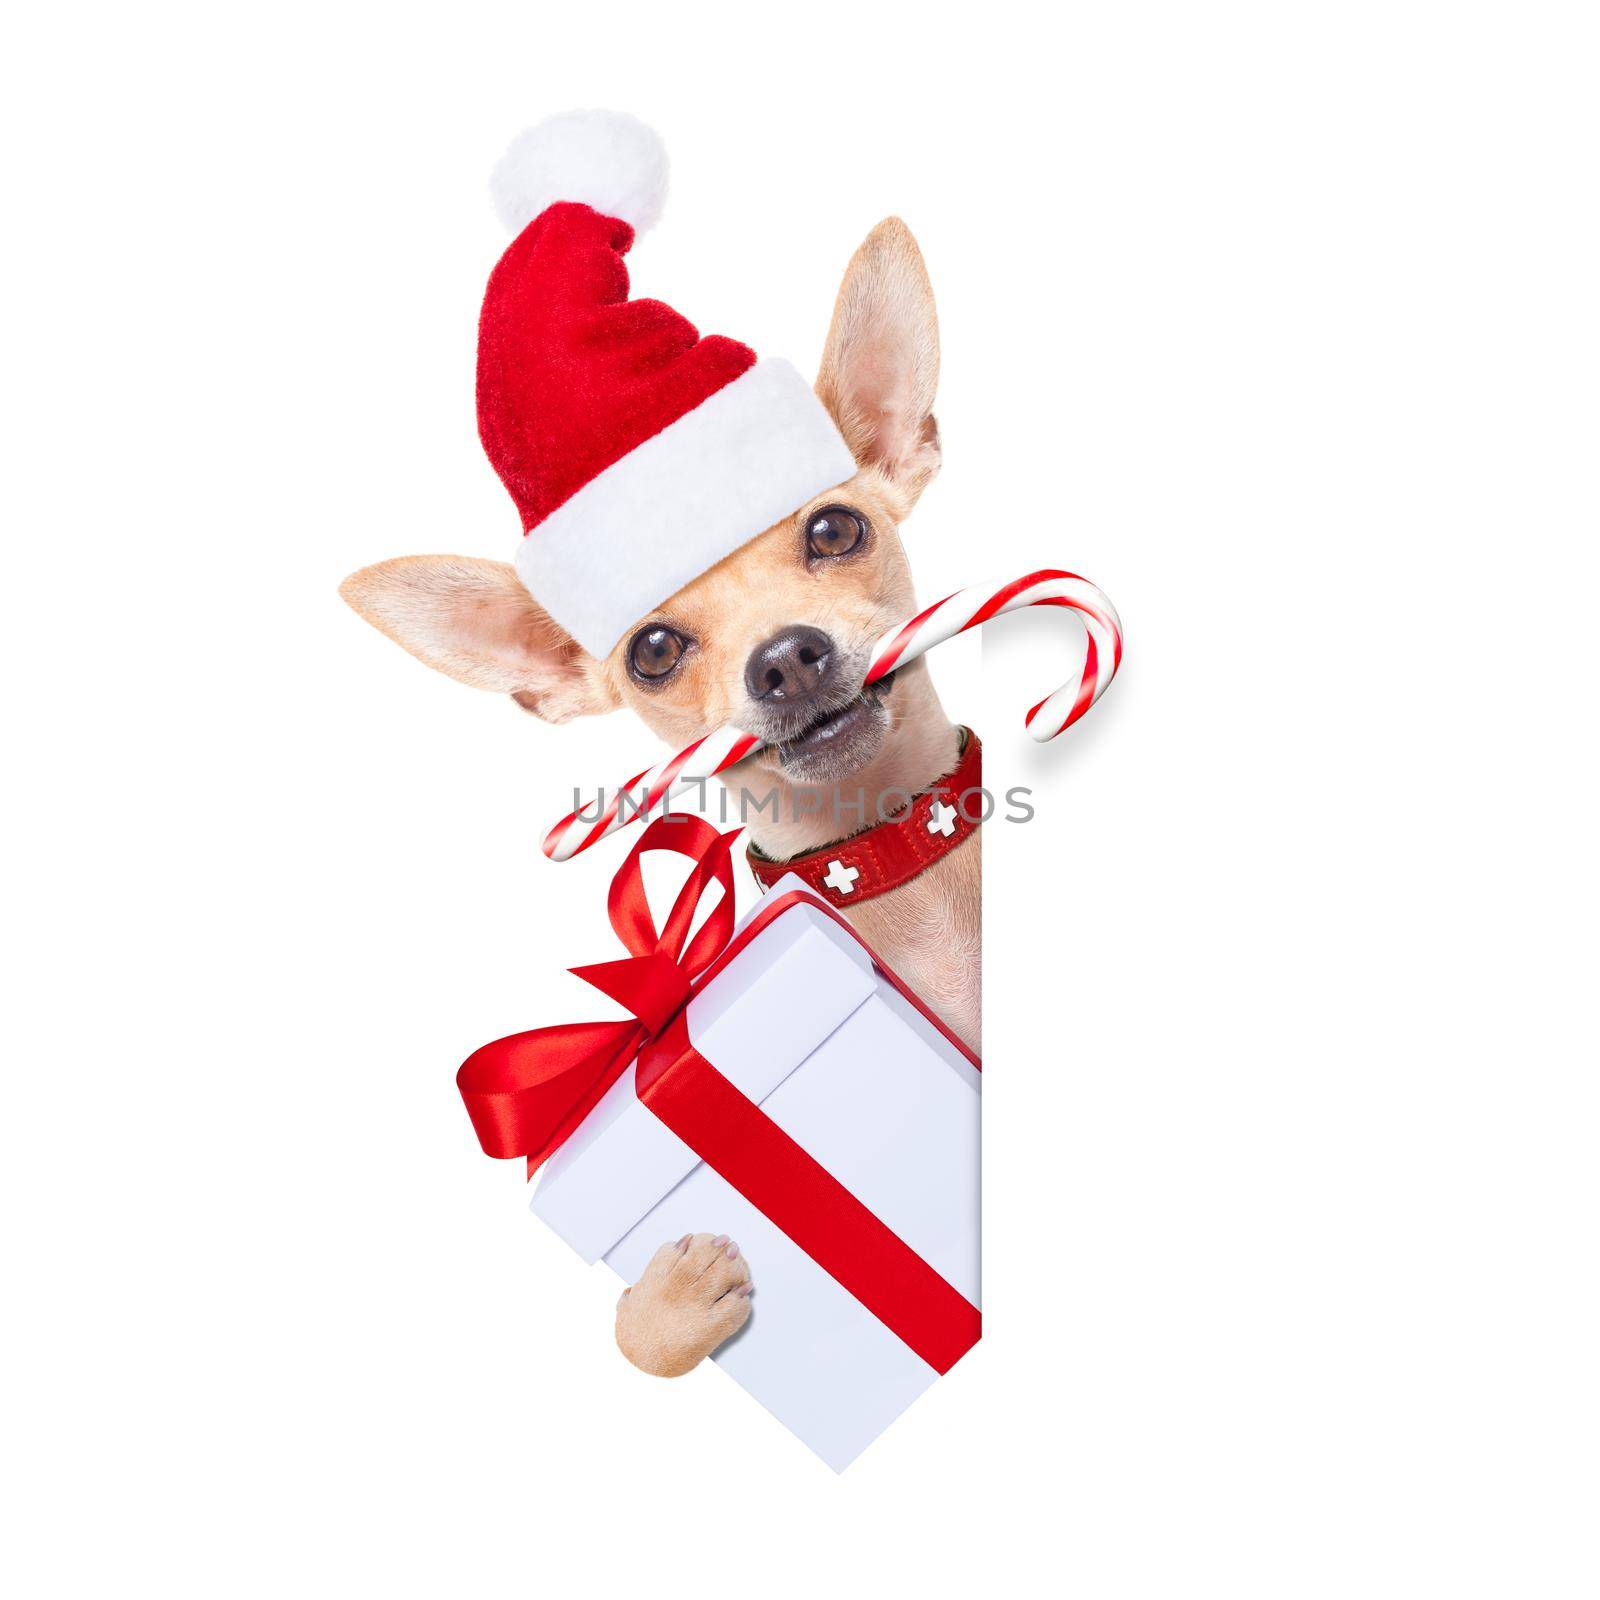 christmas dog as  santa claus by Brosch